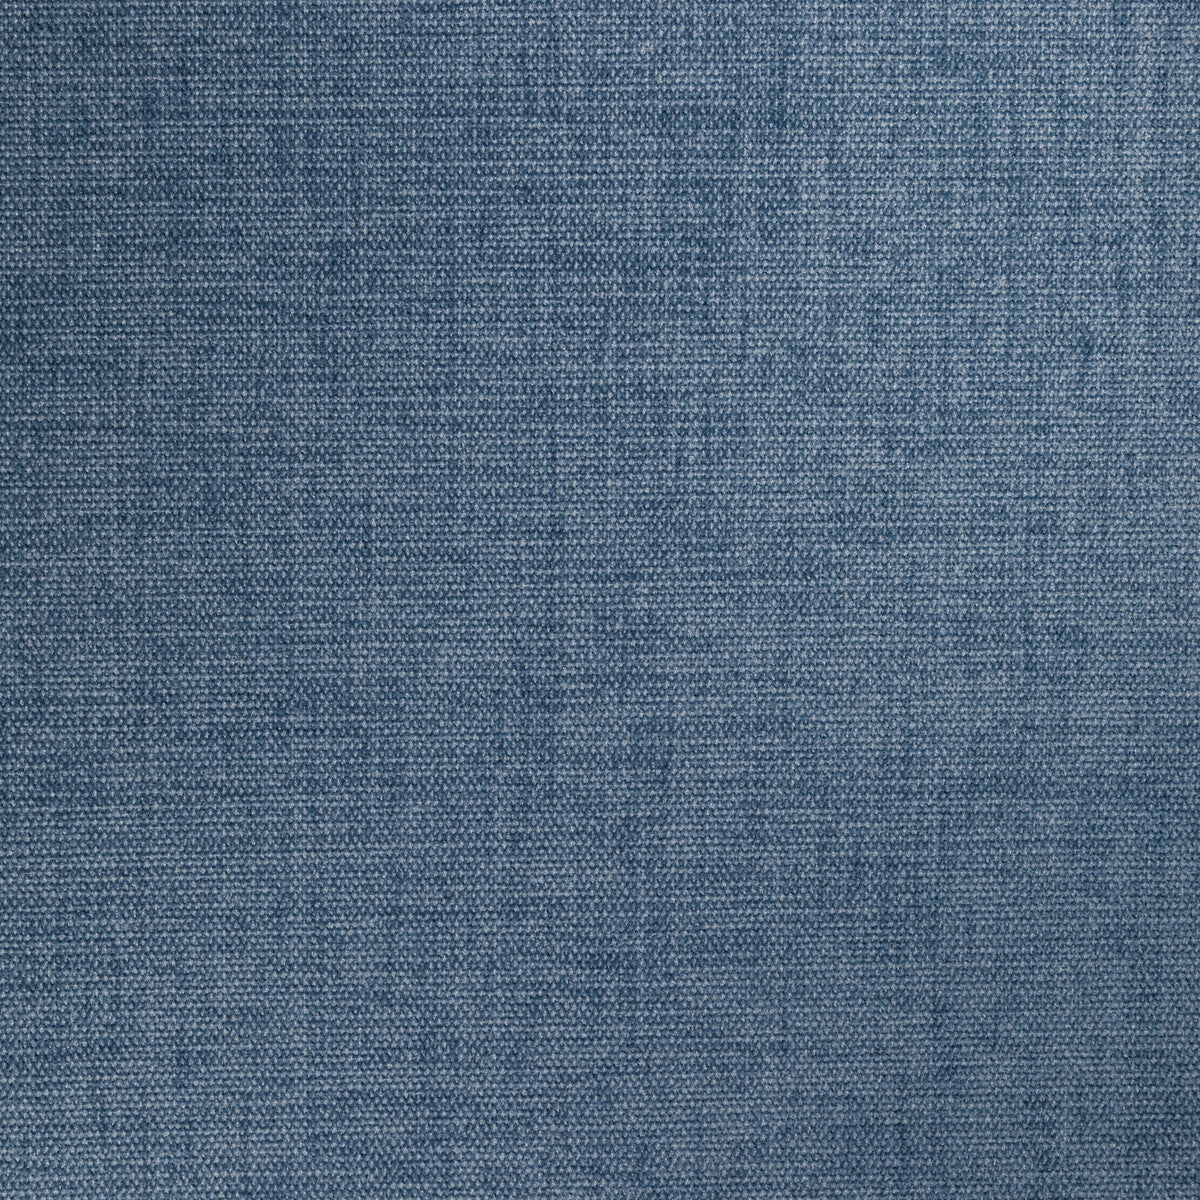 Kravet Smart fabric in 34959-1555 color - pattern 34959.1555.0 - by Kravet Smart in the Performance Kravetarmor collection